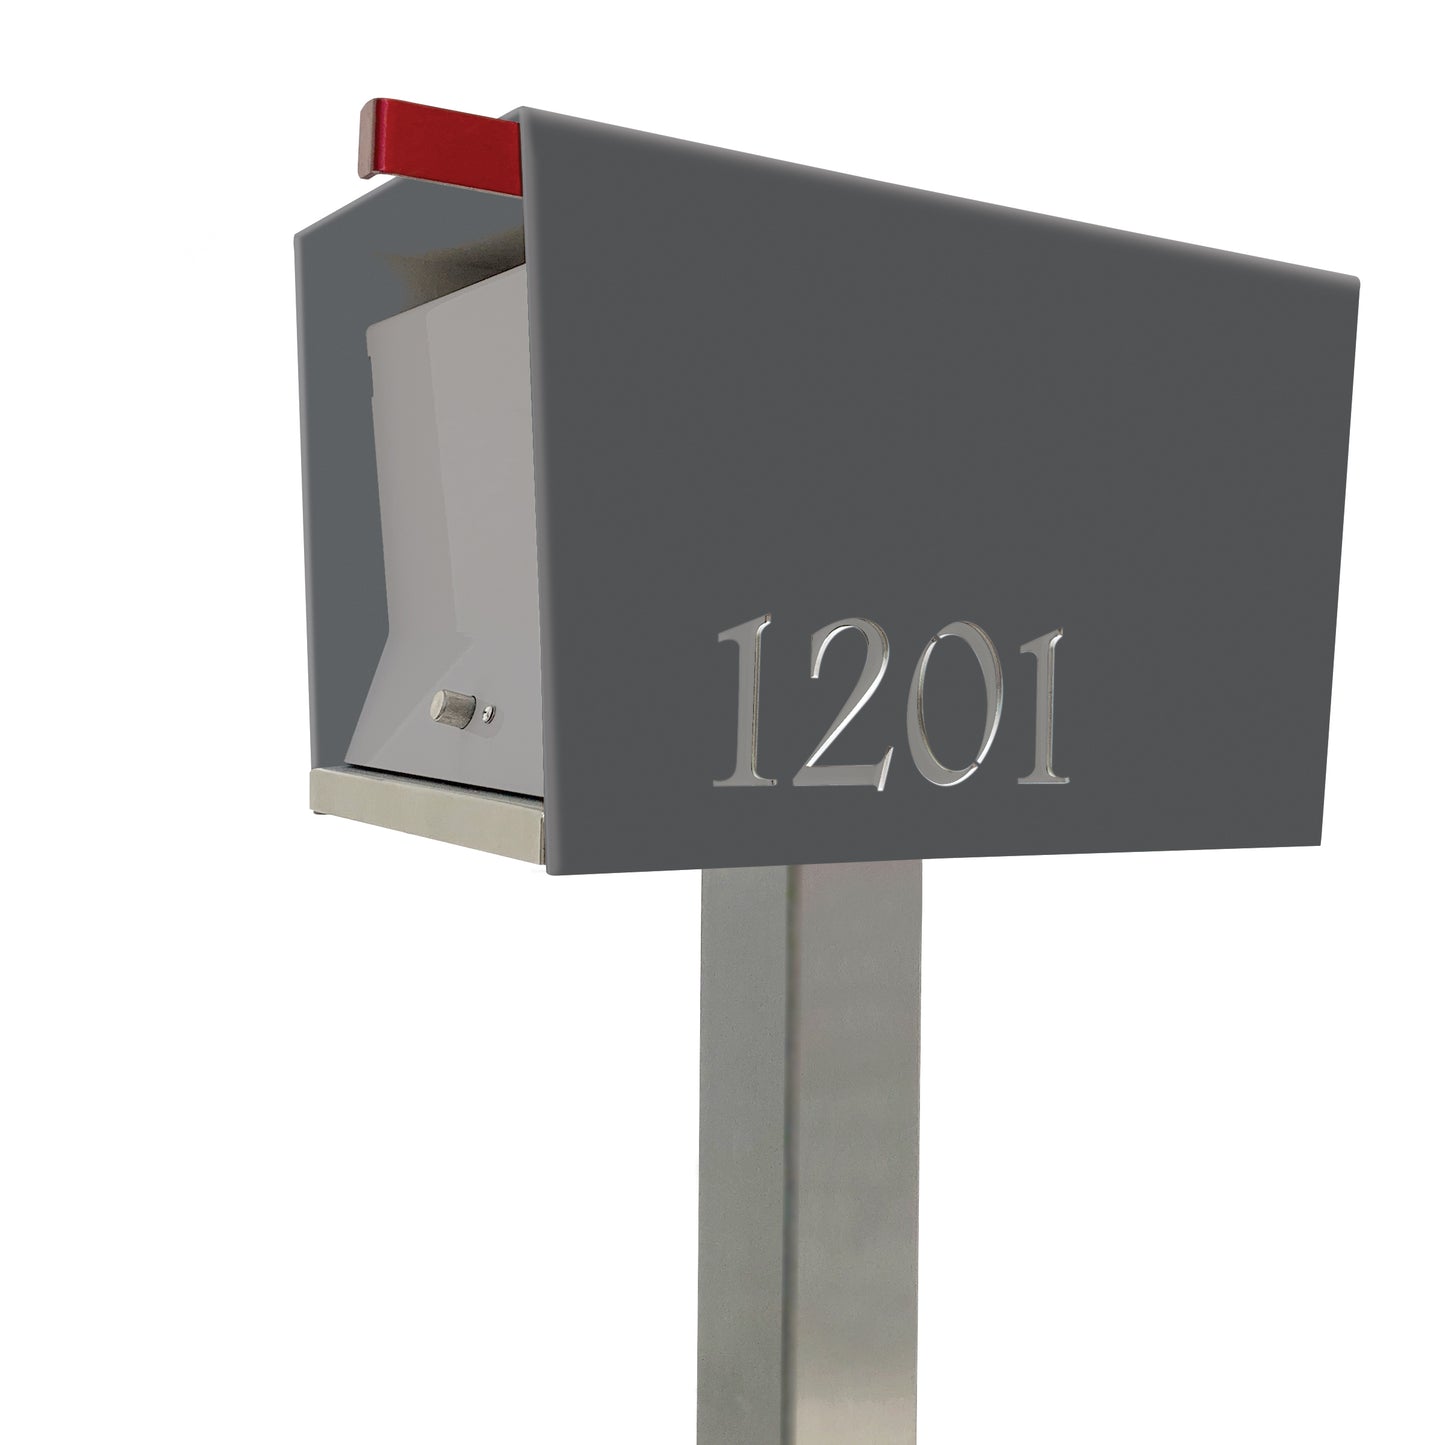 The Original UptownBox in DESIGNER GRAY - Modern Mailbox pure gray